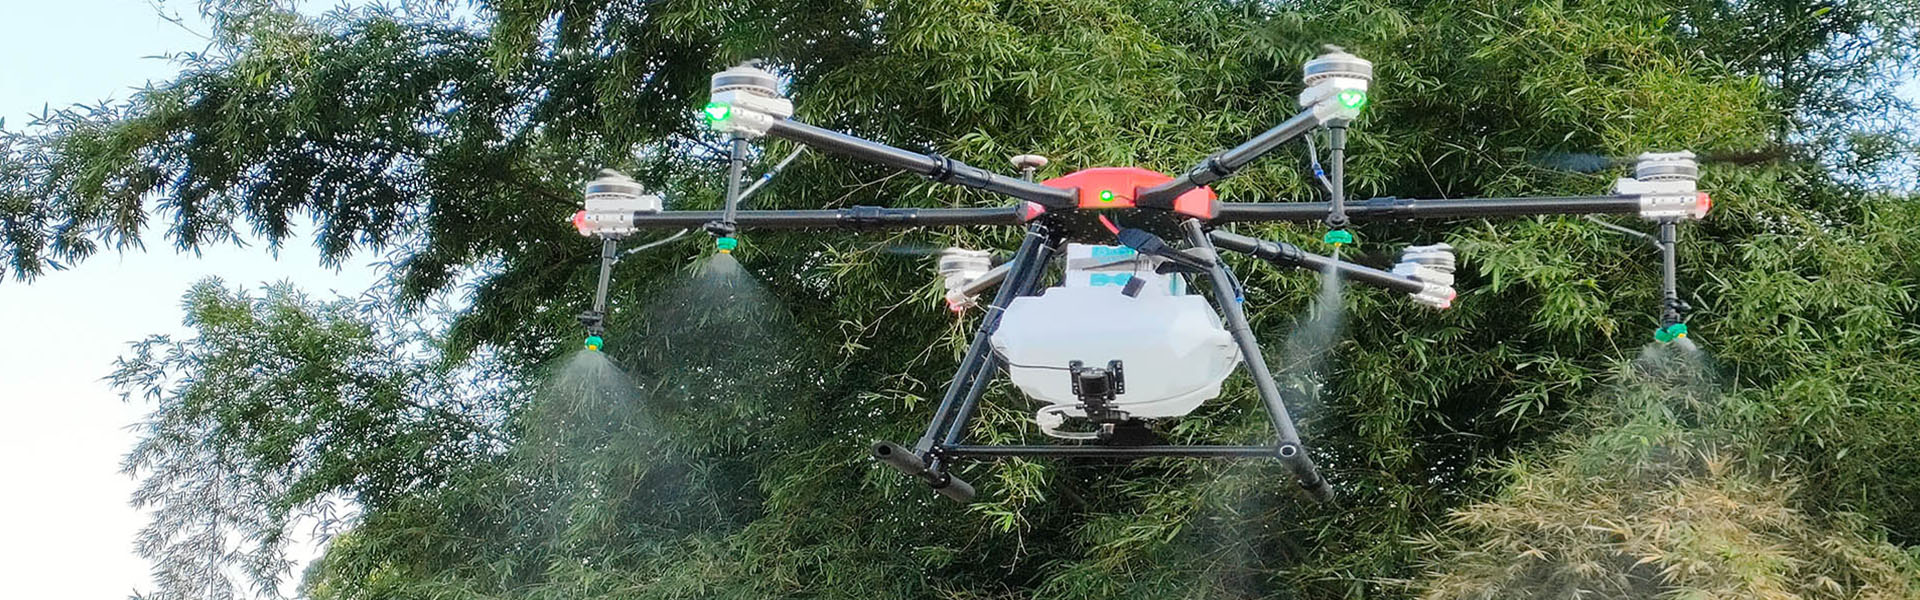 UAV agricol, protecția plantelor UAV, accesorii UAV agricole,Shenzhen fnyuav technology co.LTD